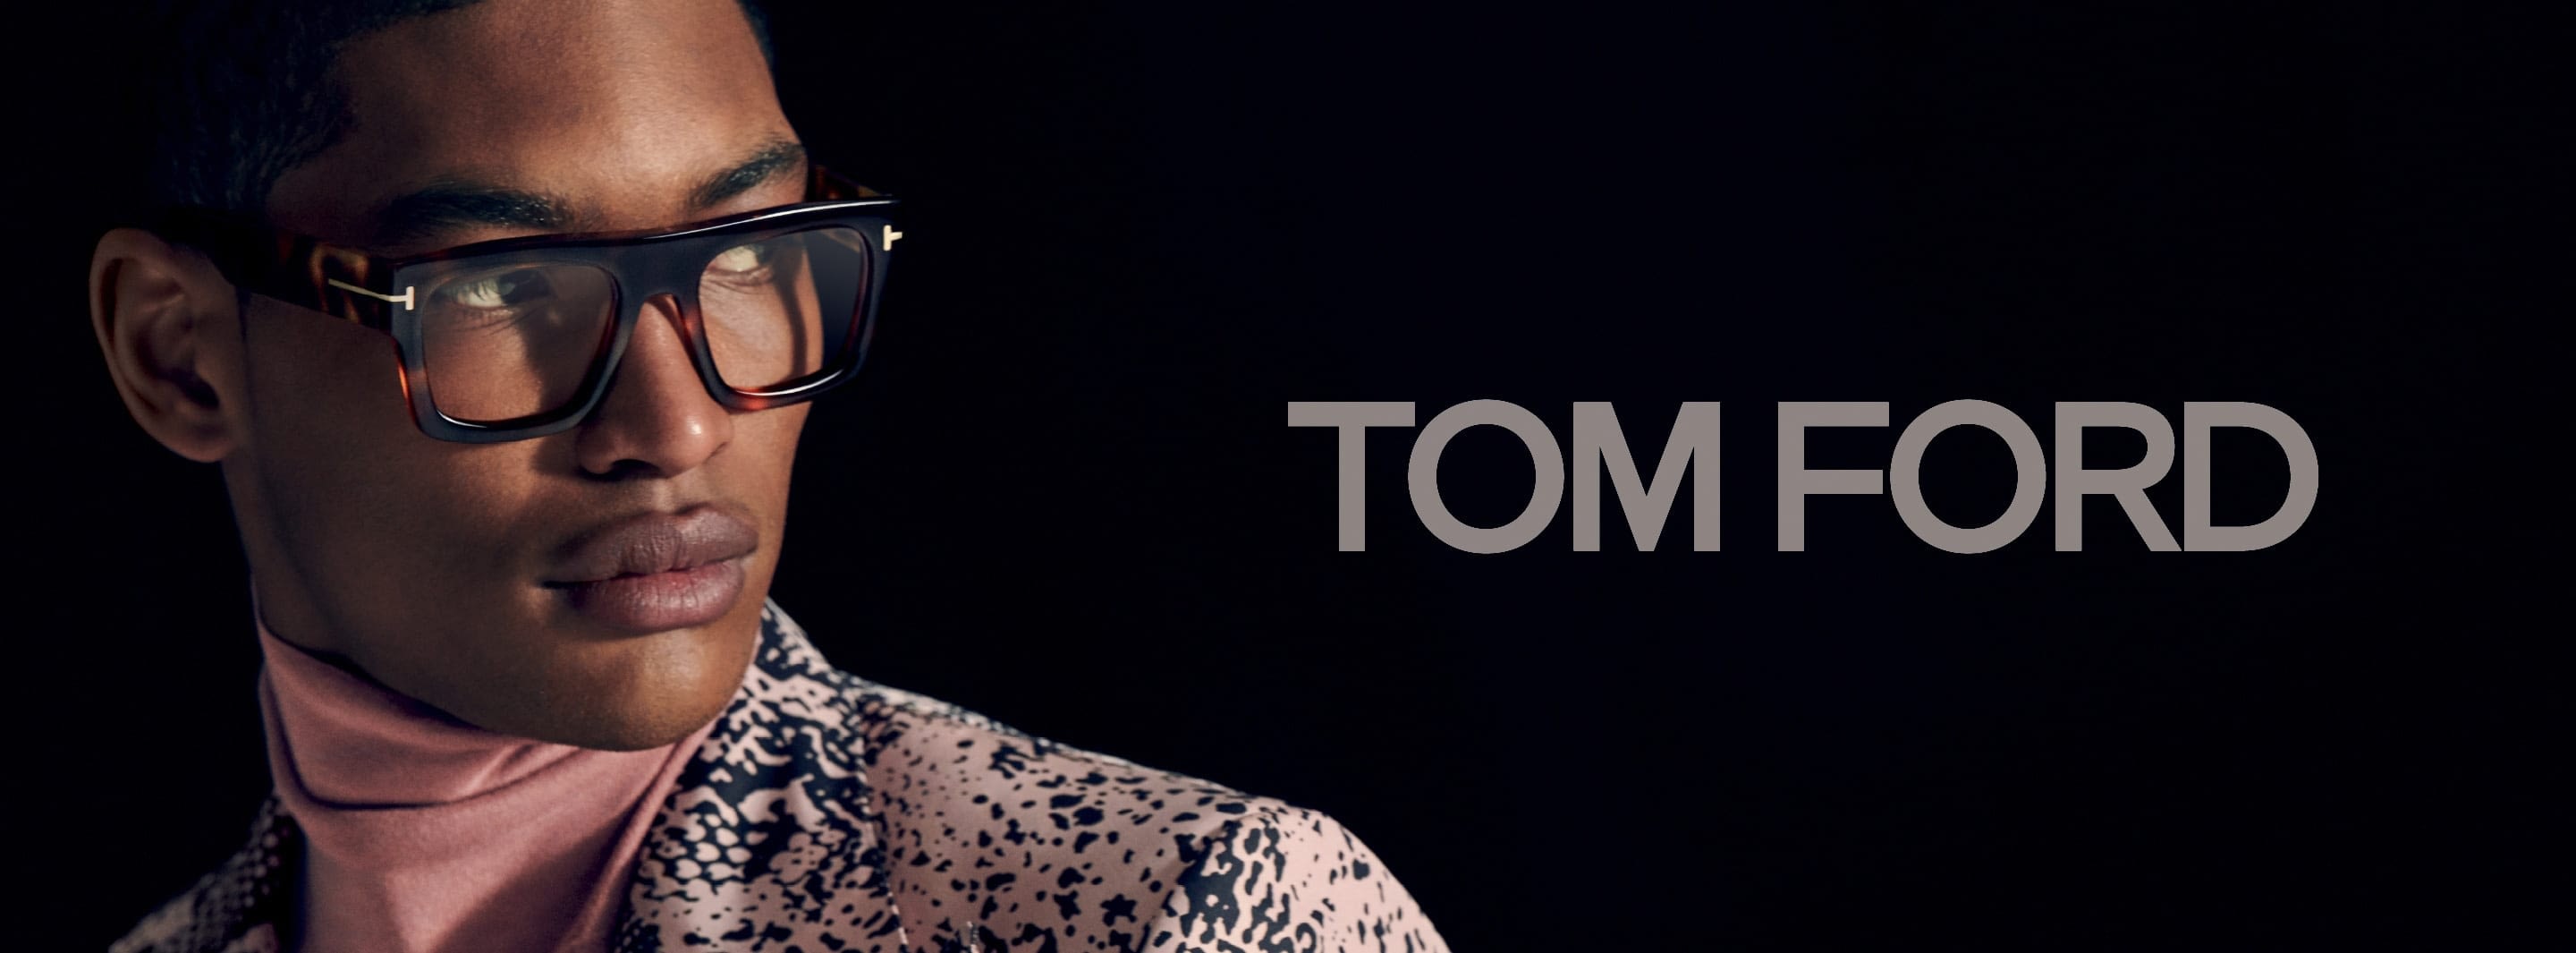 Tom Ford Cohen S Fashion Optical